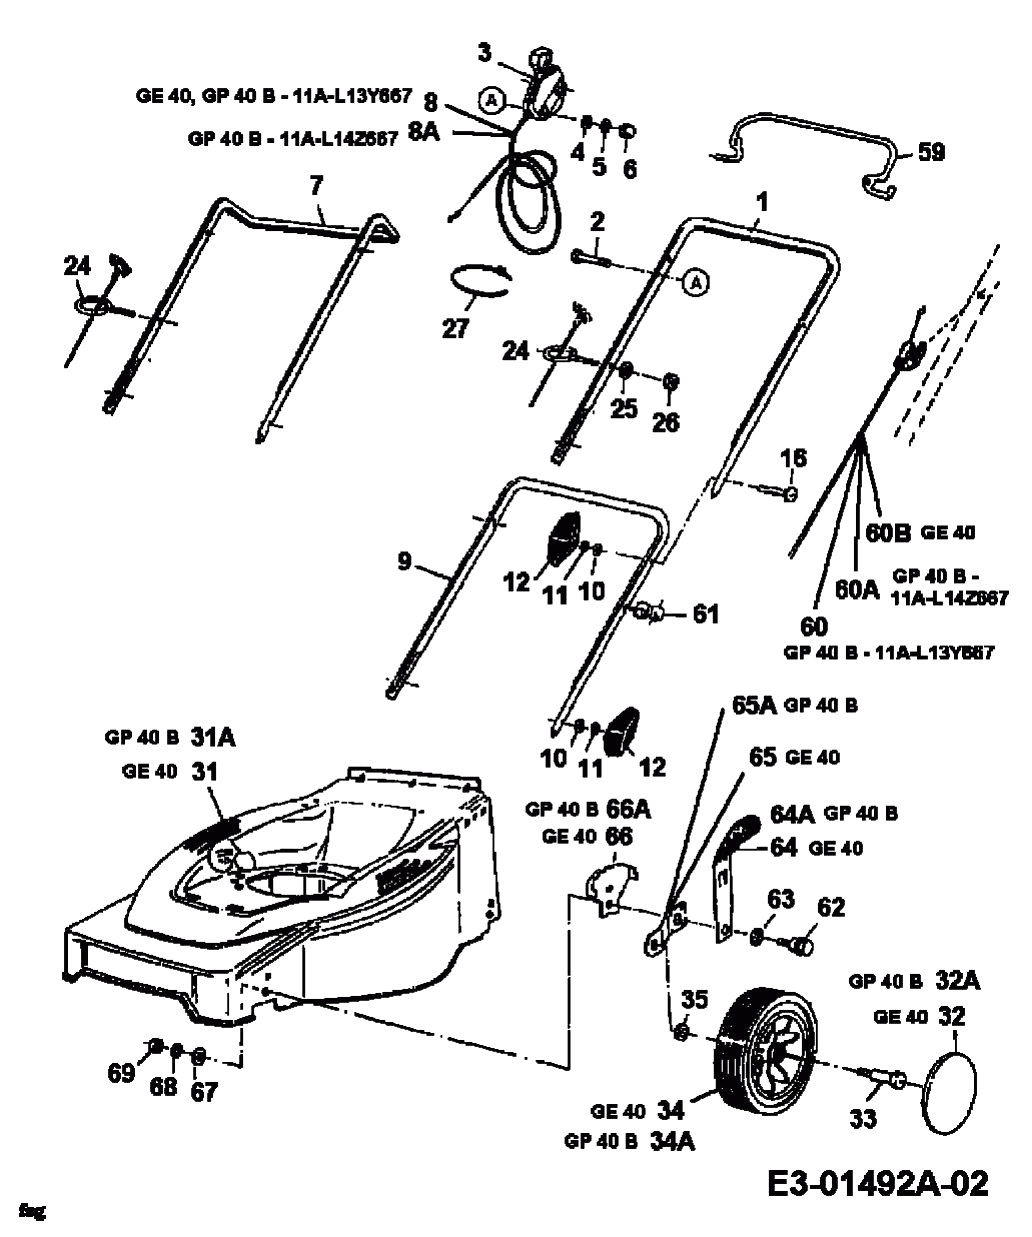 MTD Артикул 11B-L00Z678 (год выпуска 2000). Ручка, колеса, регулятор высоты реза